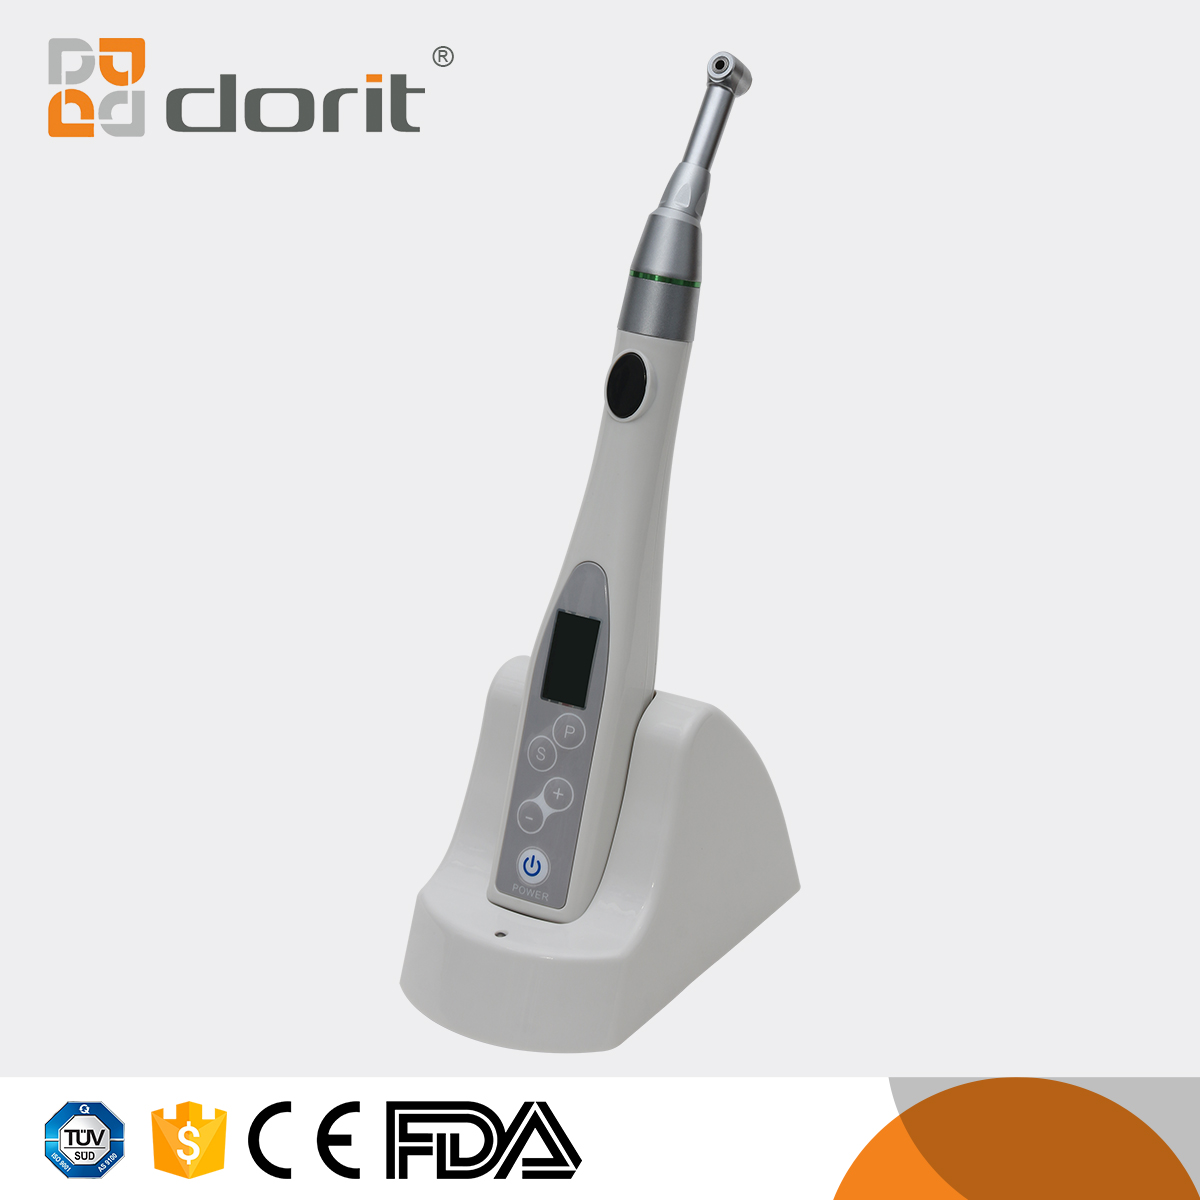 DORIT dental endo motor mini wireless endomotor with built-in apex locator/Dental endo motor 